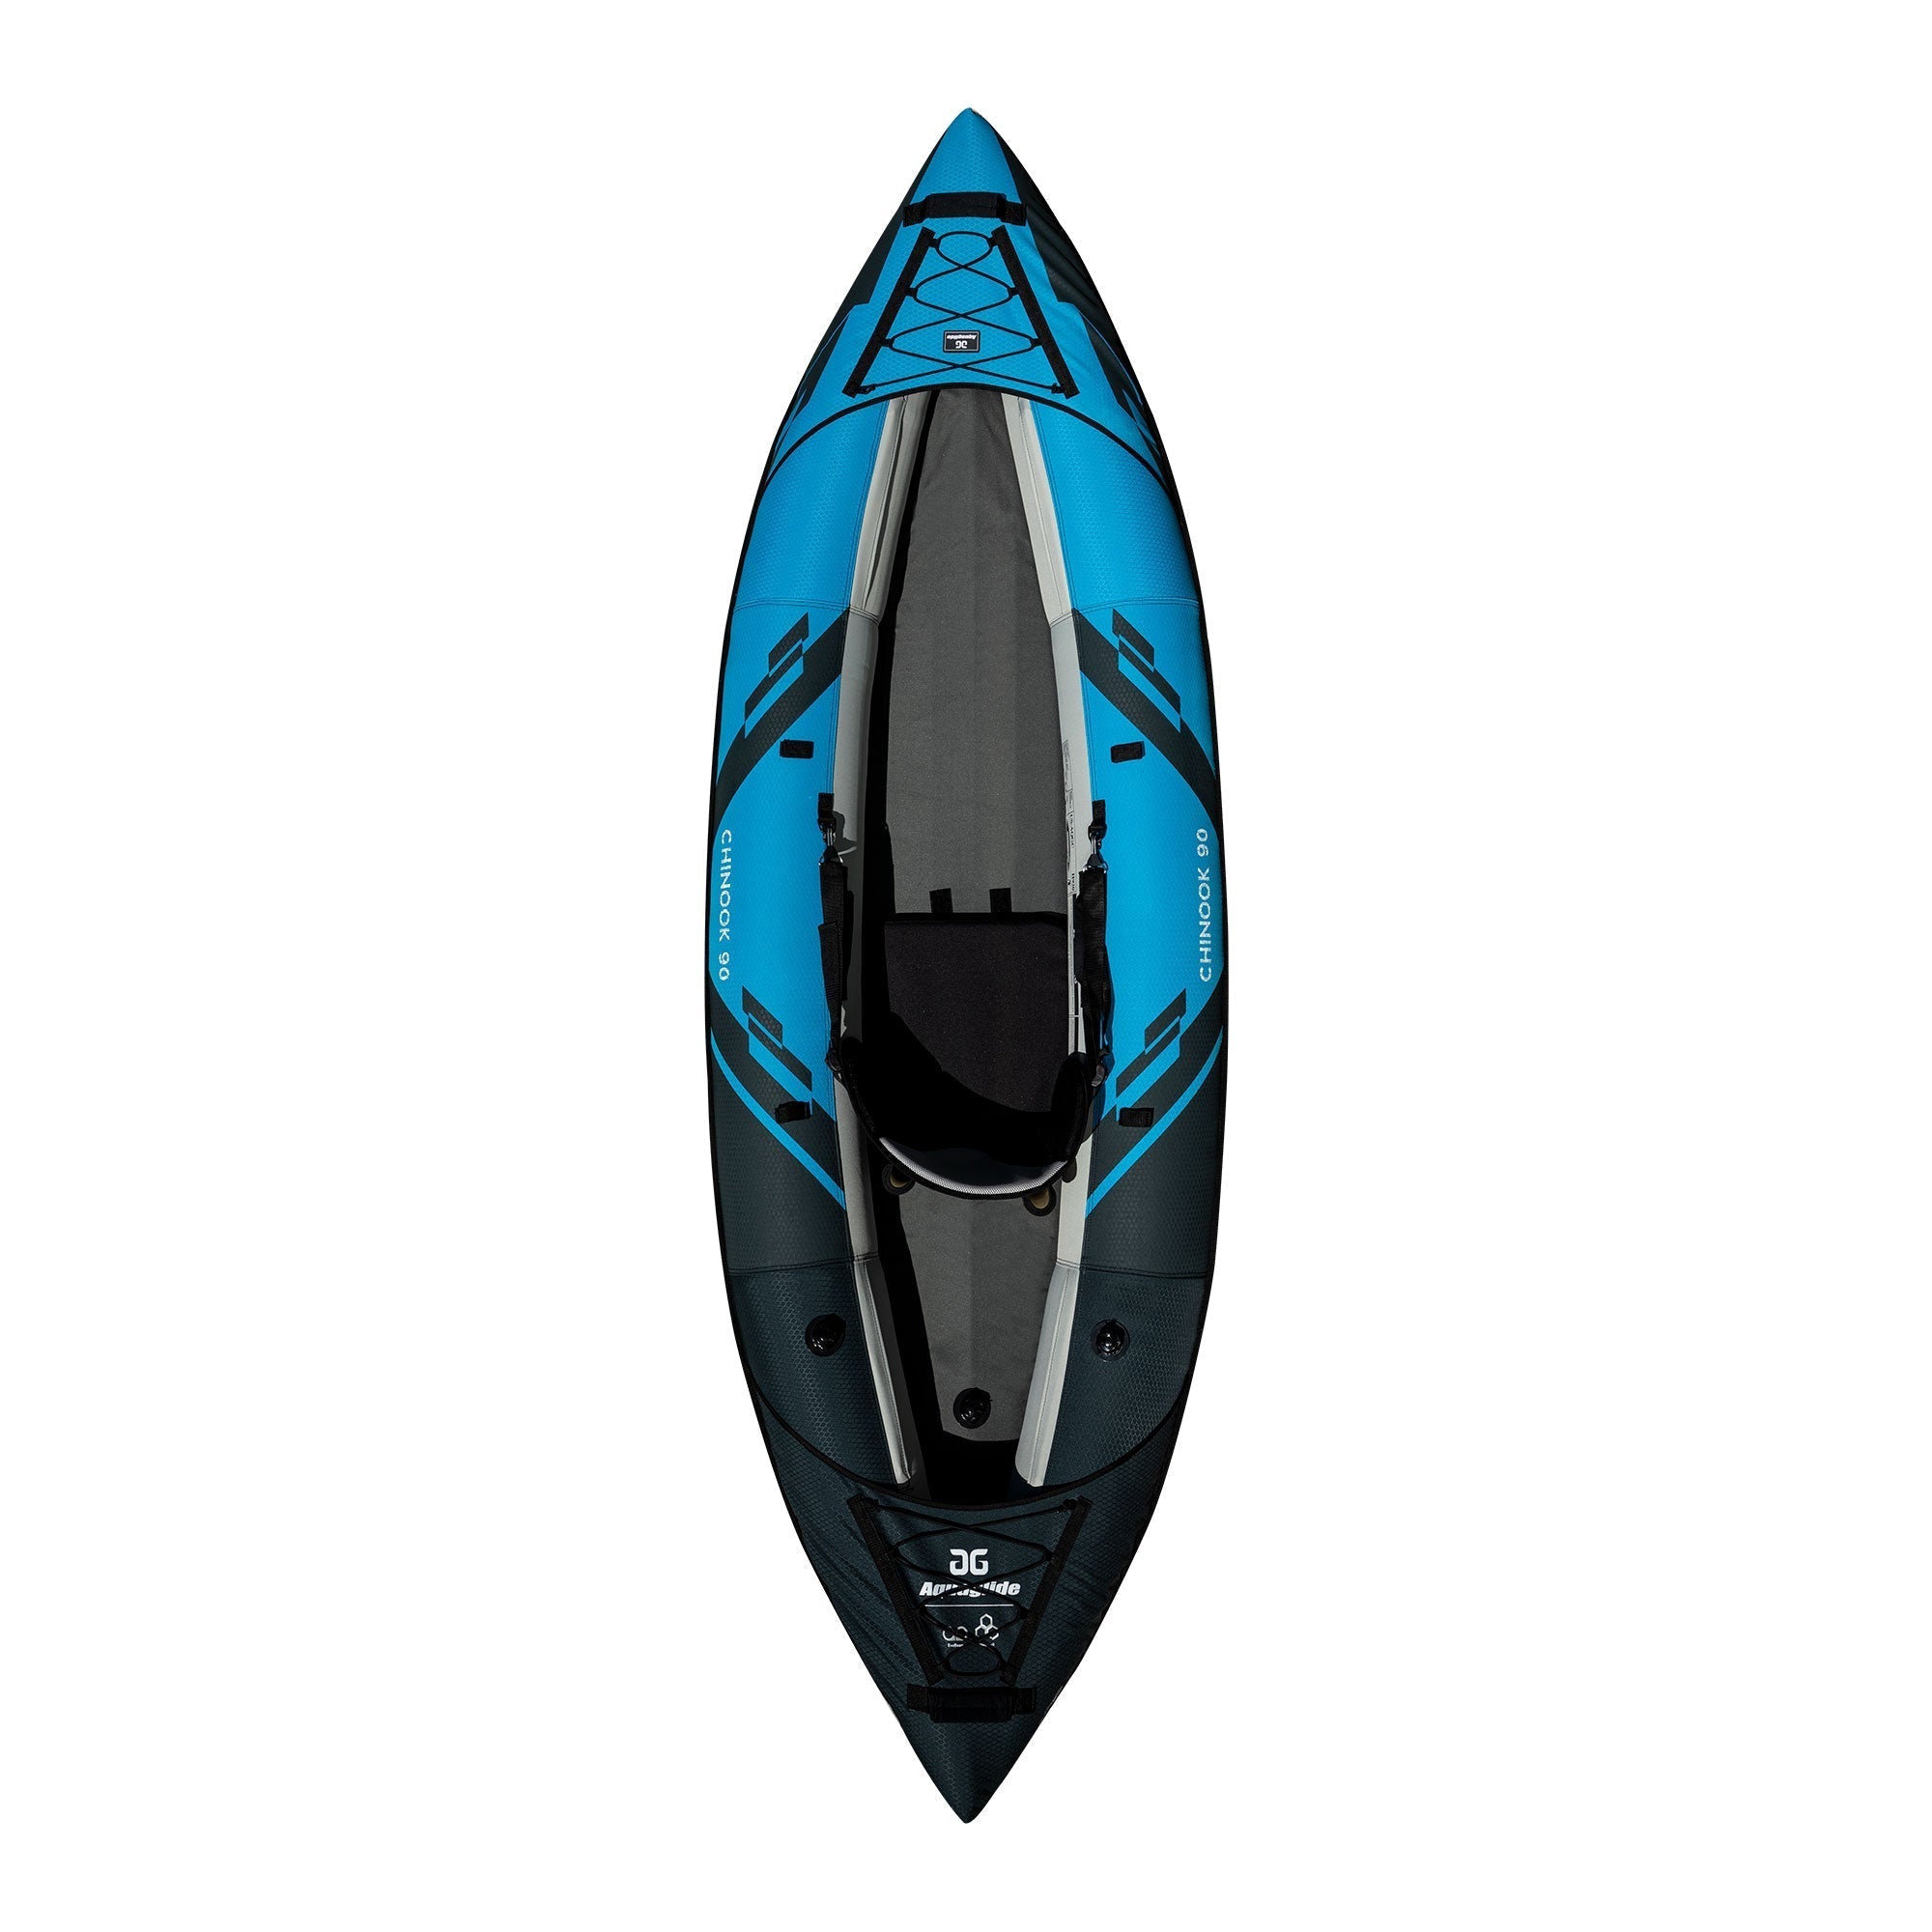 Aquaglide Chinook 90 Inflatable Kayak - Worthing Watersports - Kayaks - Aquaglide